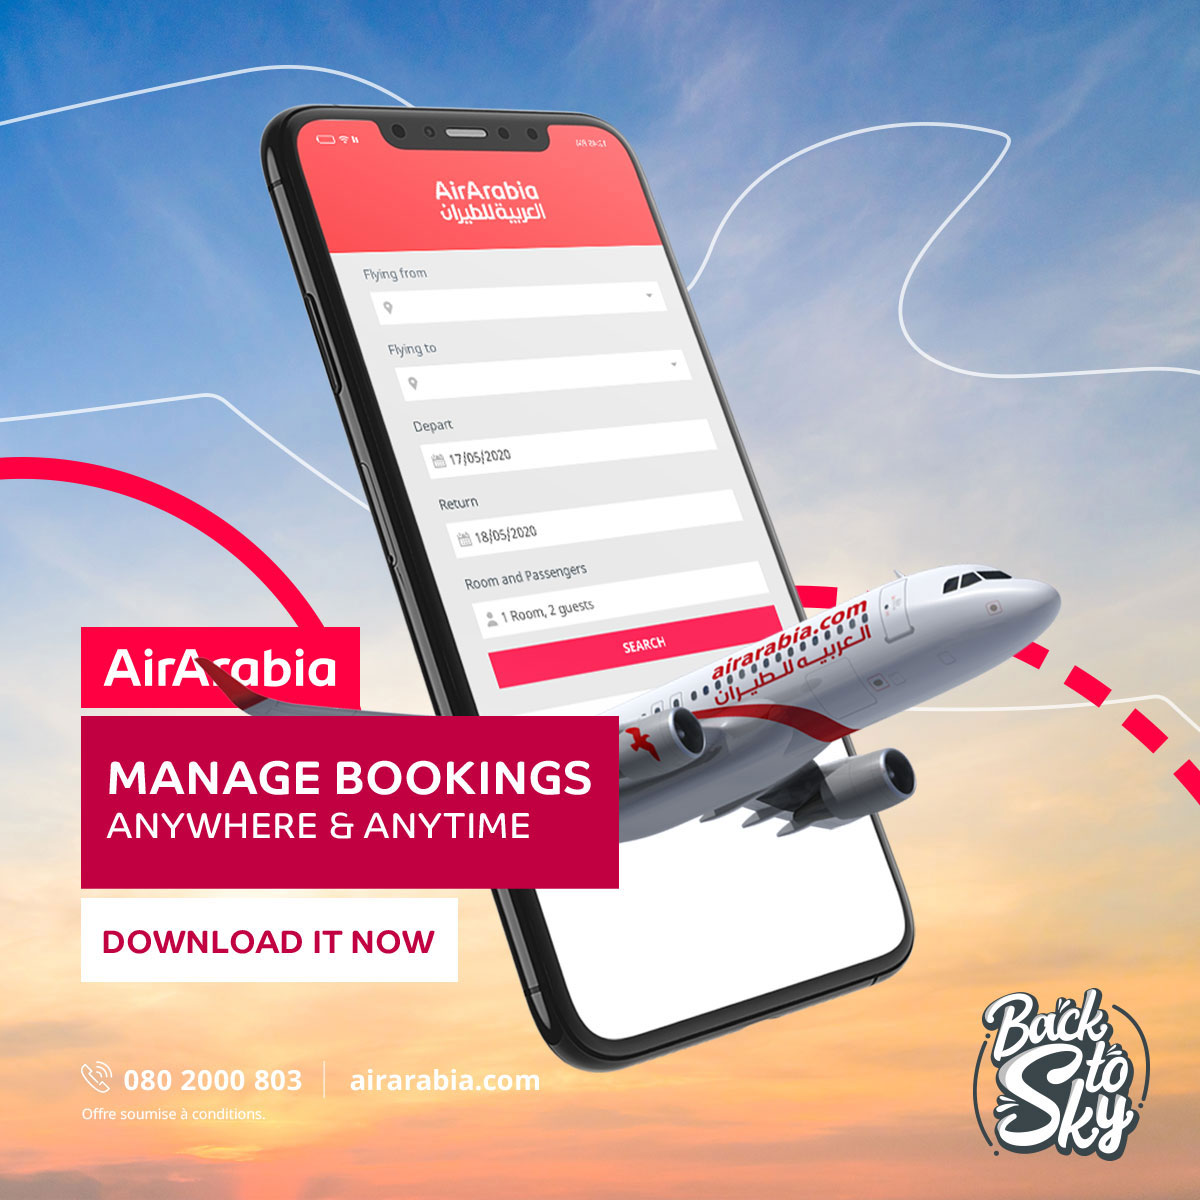 air arabia campaign social media marketing creative copywriting art direction designs